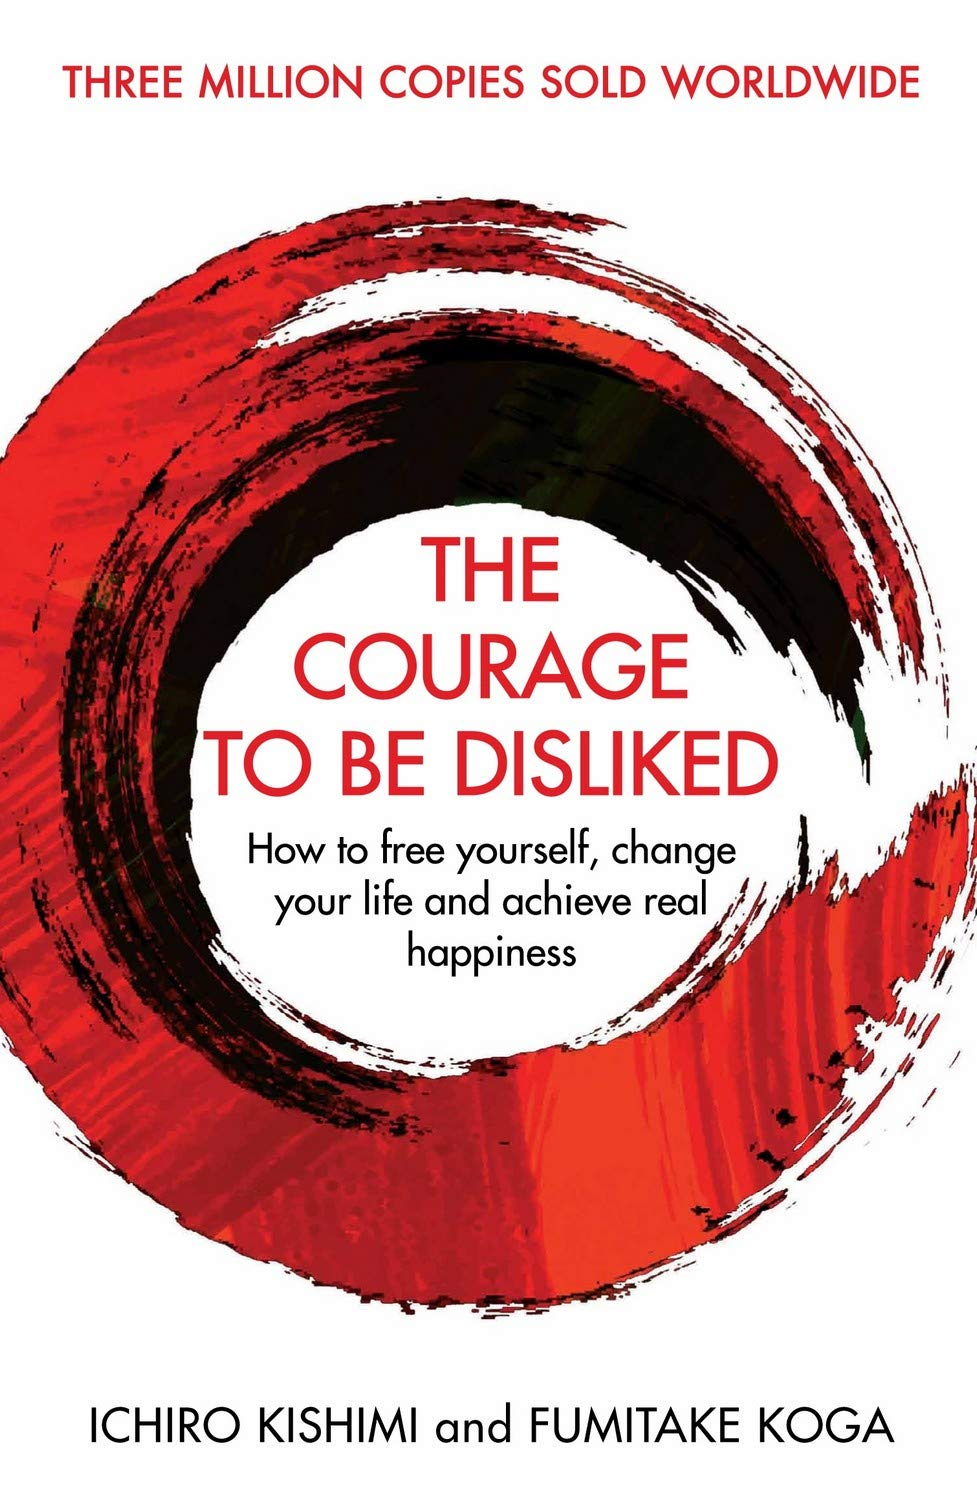 The Courage to be Disliked by Ichiro Kishimi and Fumitake Koga book cover